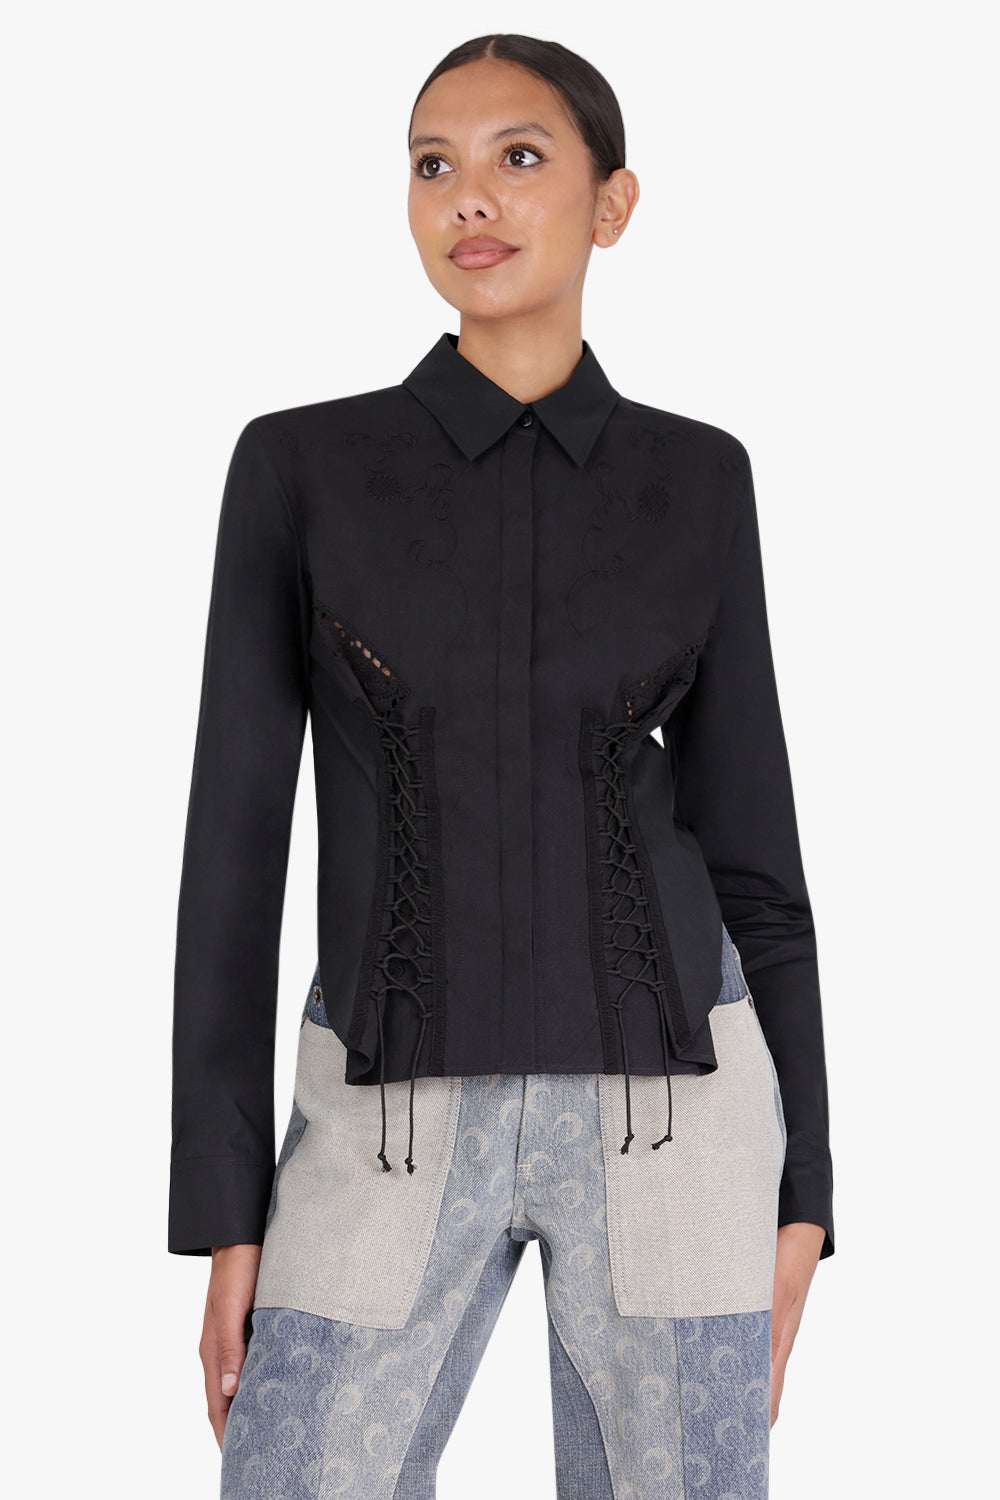 MARINE SERRE RTW Regenerated Household Linen Corset Shirt | Black